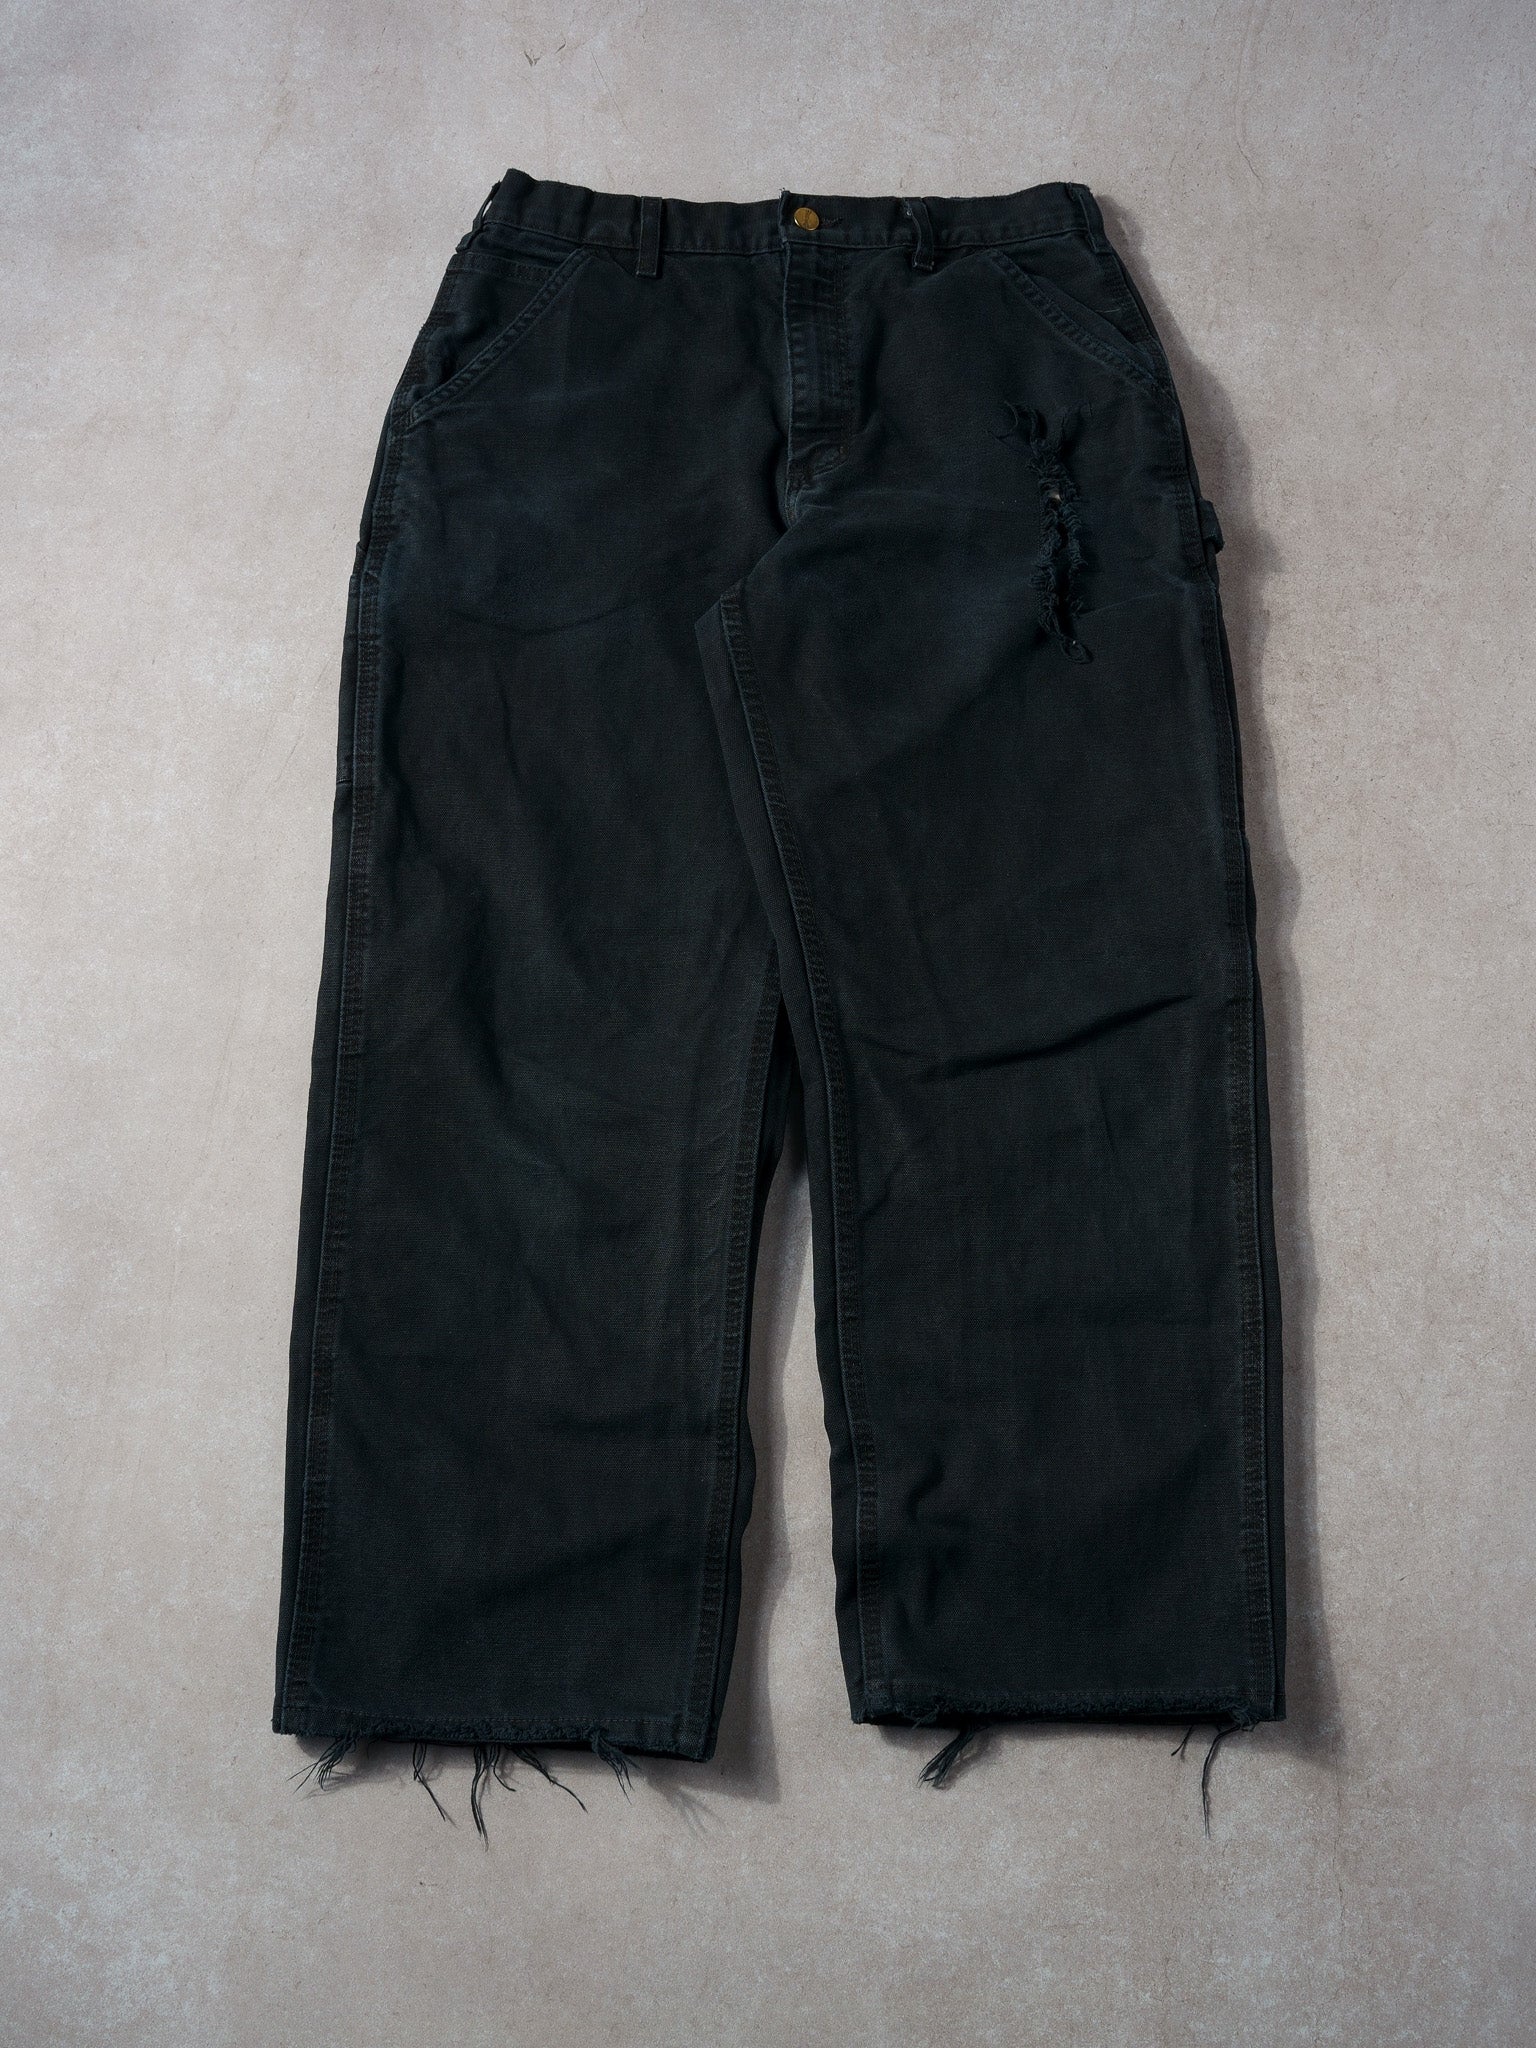 Vintage 90s Black Carhartt Dungeree Fit Carpenter Pants (32x28)